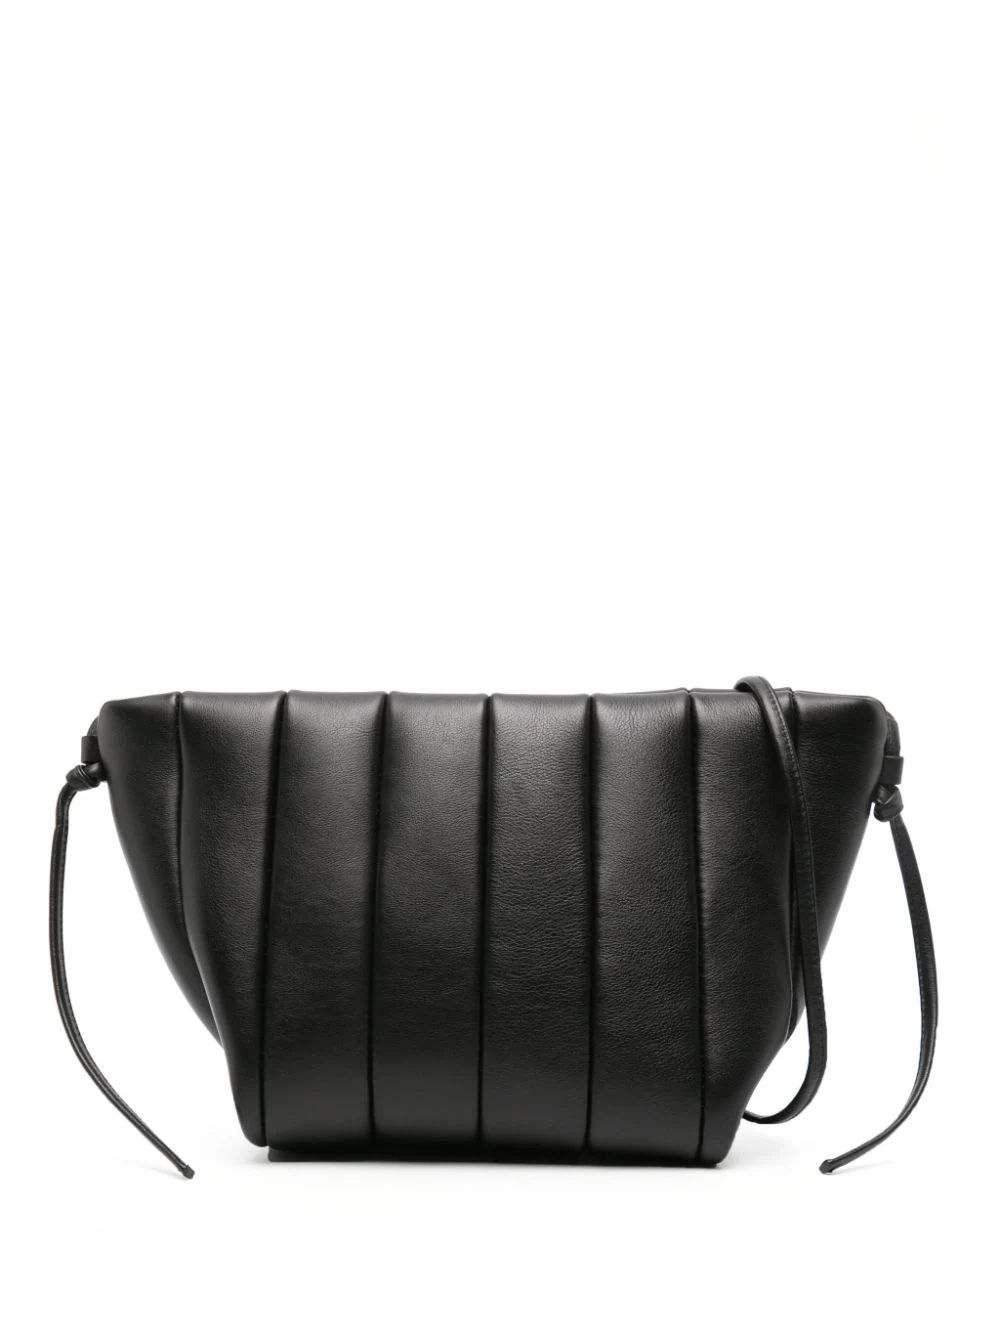 Boulevard padded leather shoulder bag | Farfetch Global